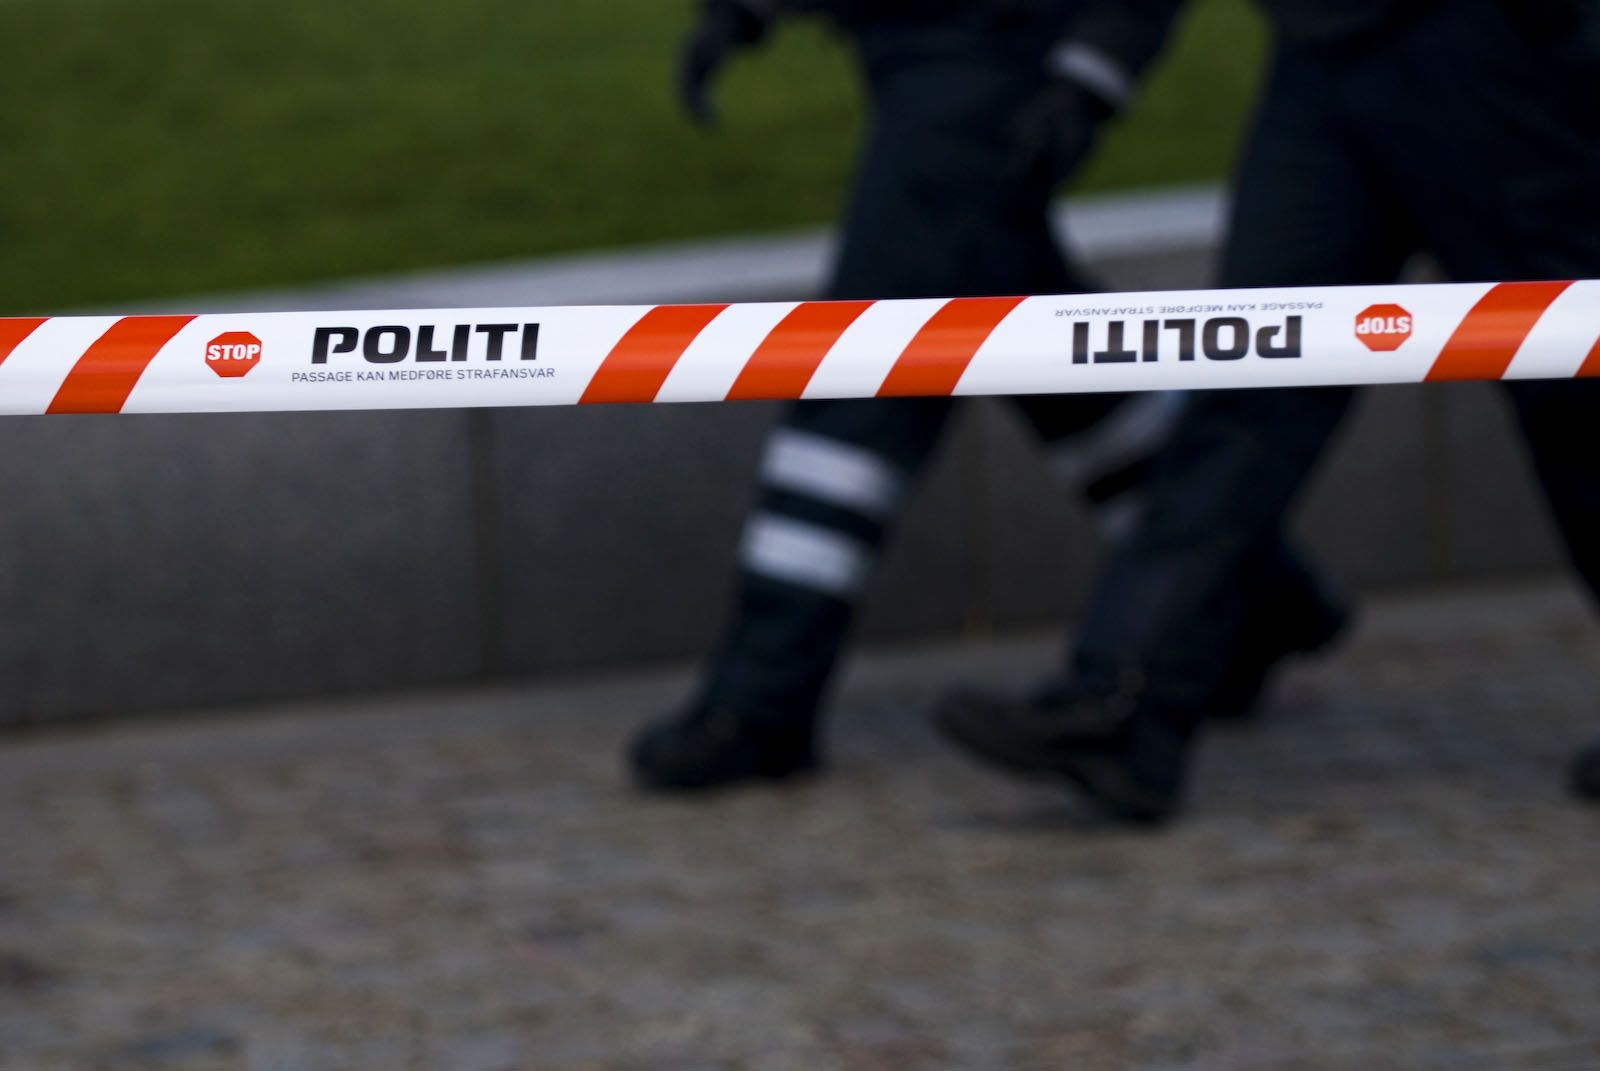 Copenhagen shaken by three fatal shootings in three nights